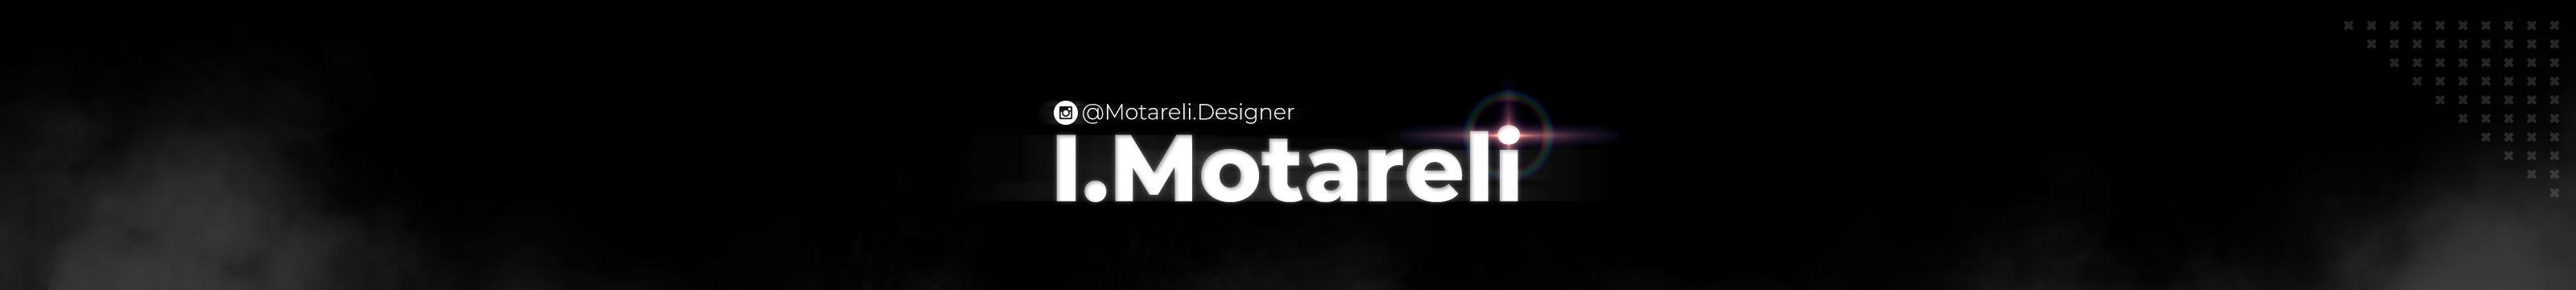 Igor Motareli's profile banner